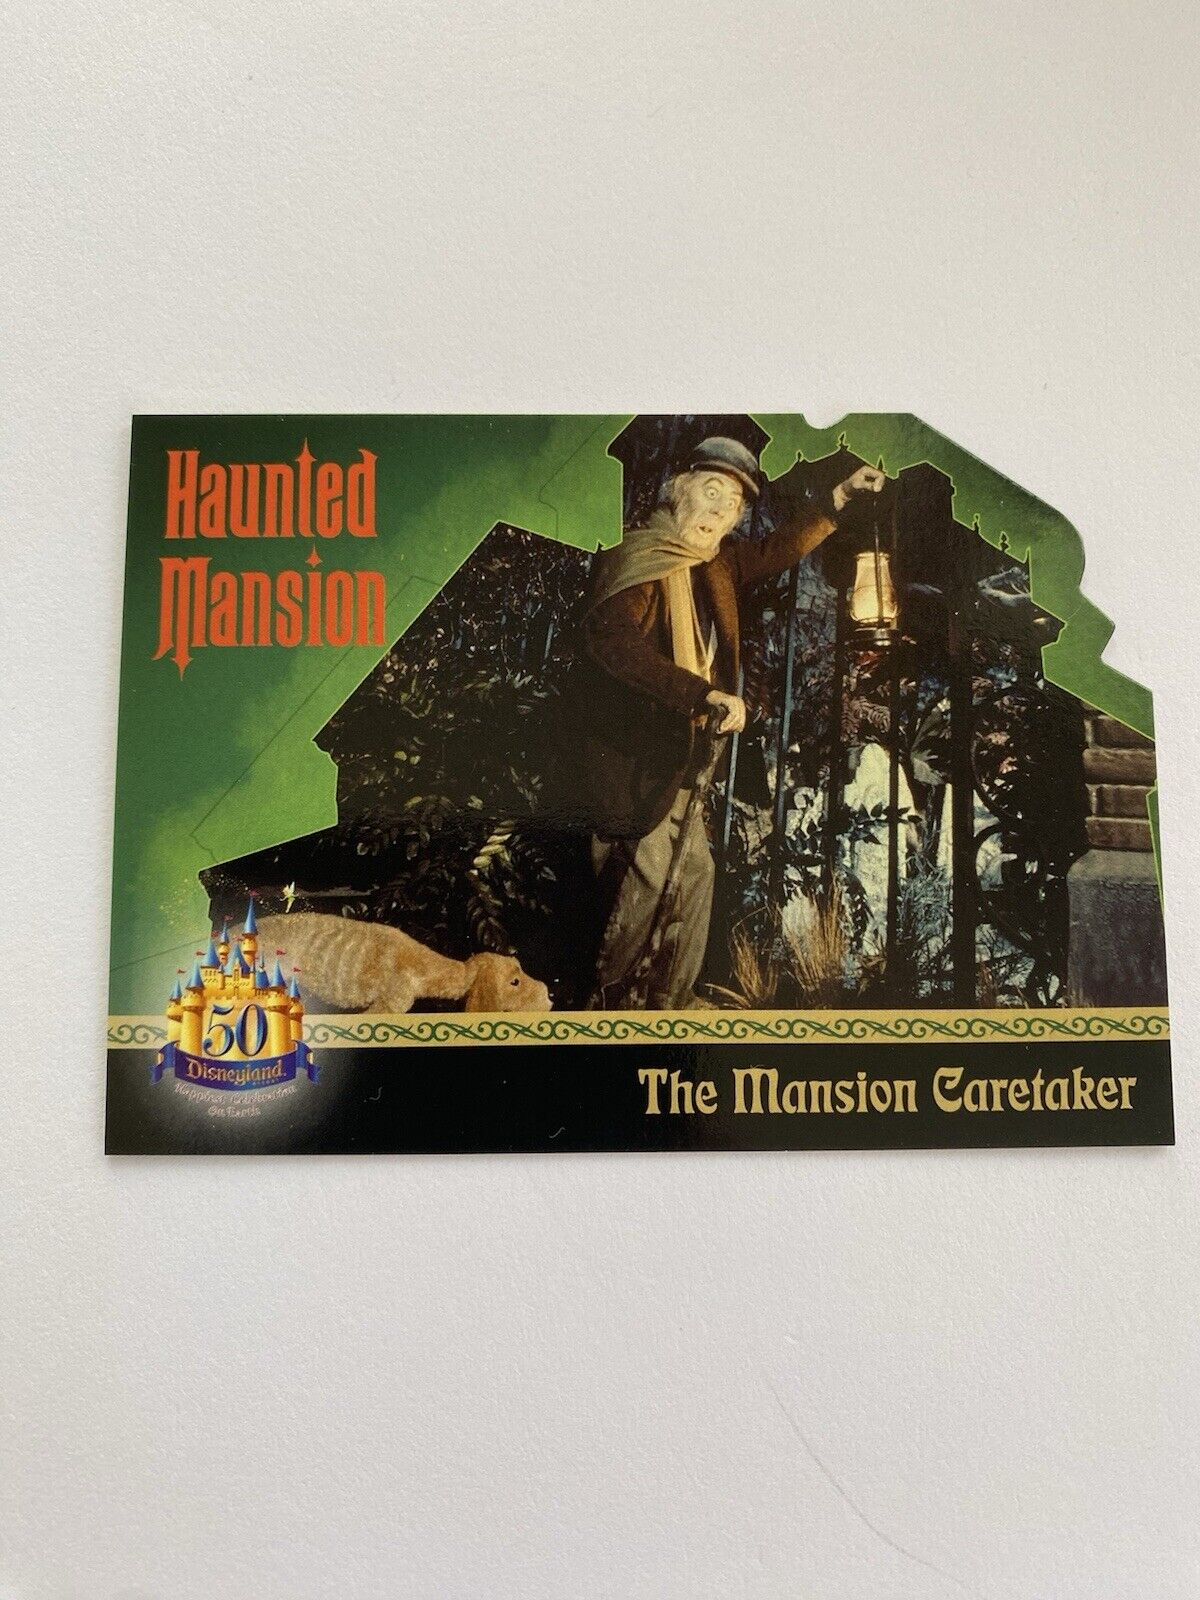 2005 Upper Deck Disneyland Haunted Mansion SP Die Cut DL-122 “Mansion Caretaker”